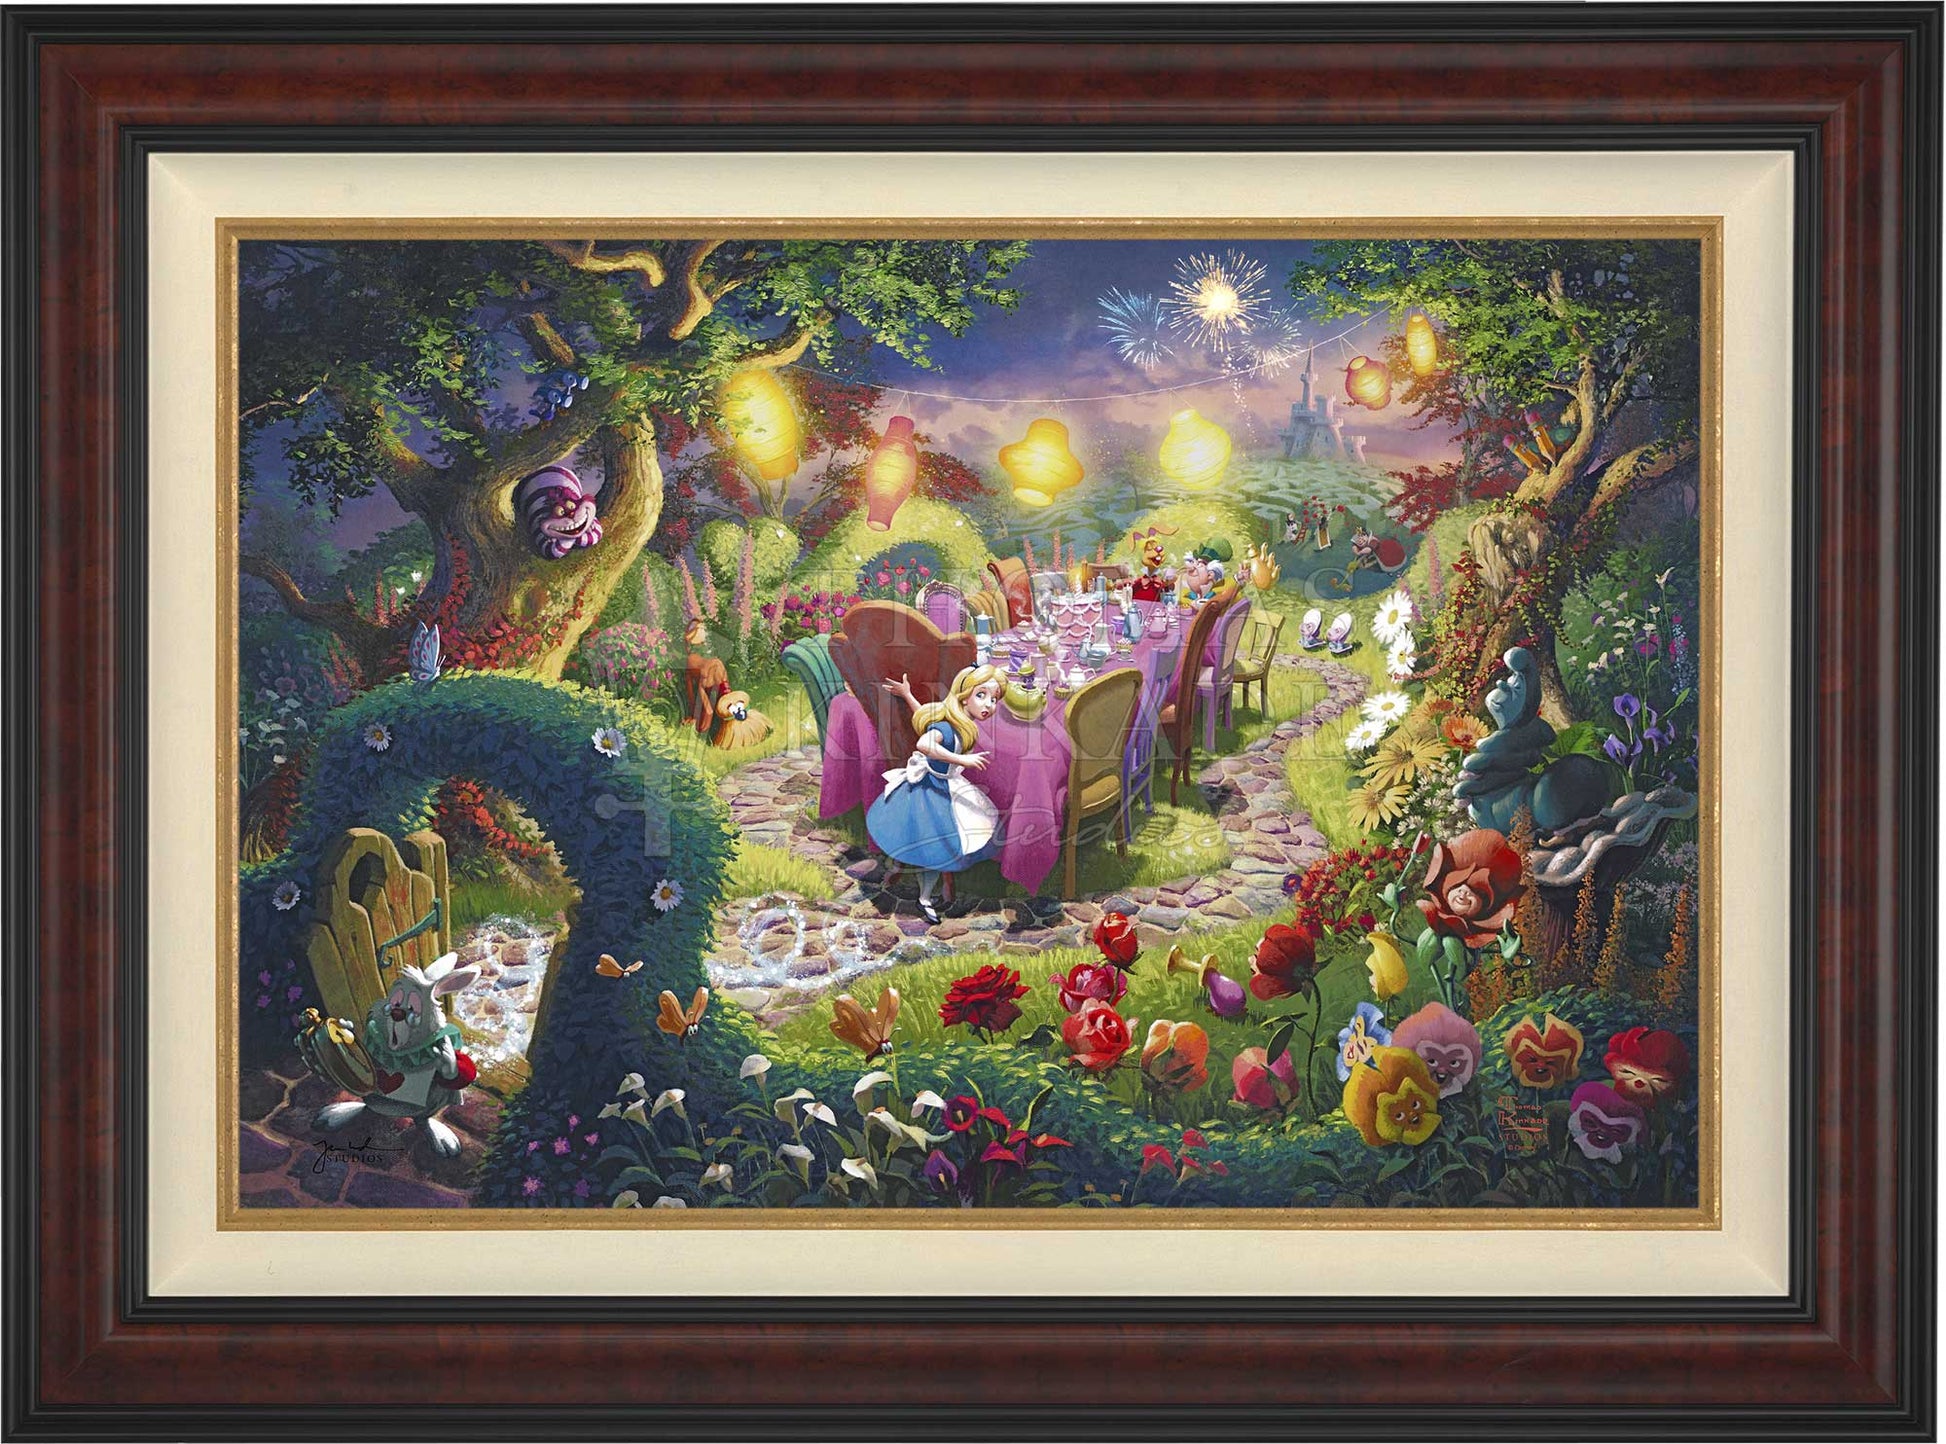 Mad Hatter Tea Party Decorations set of 6 Alice in Wonderland